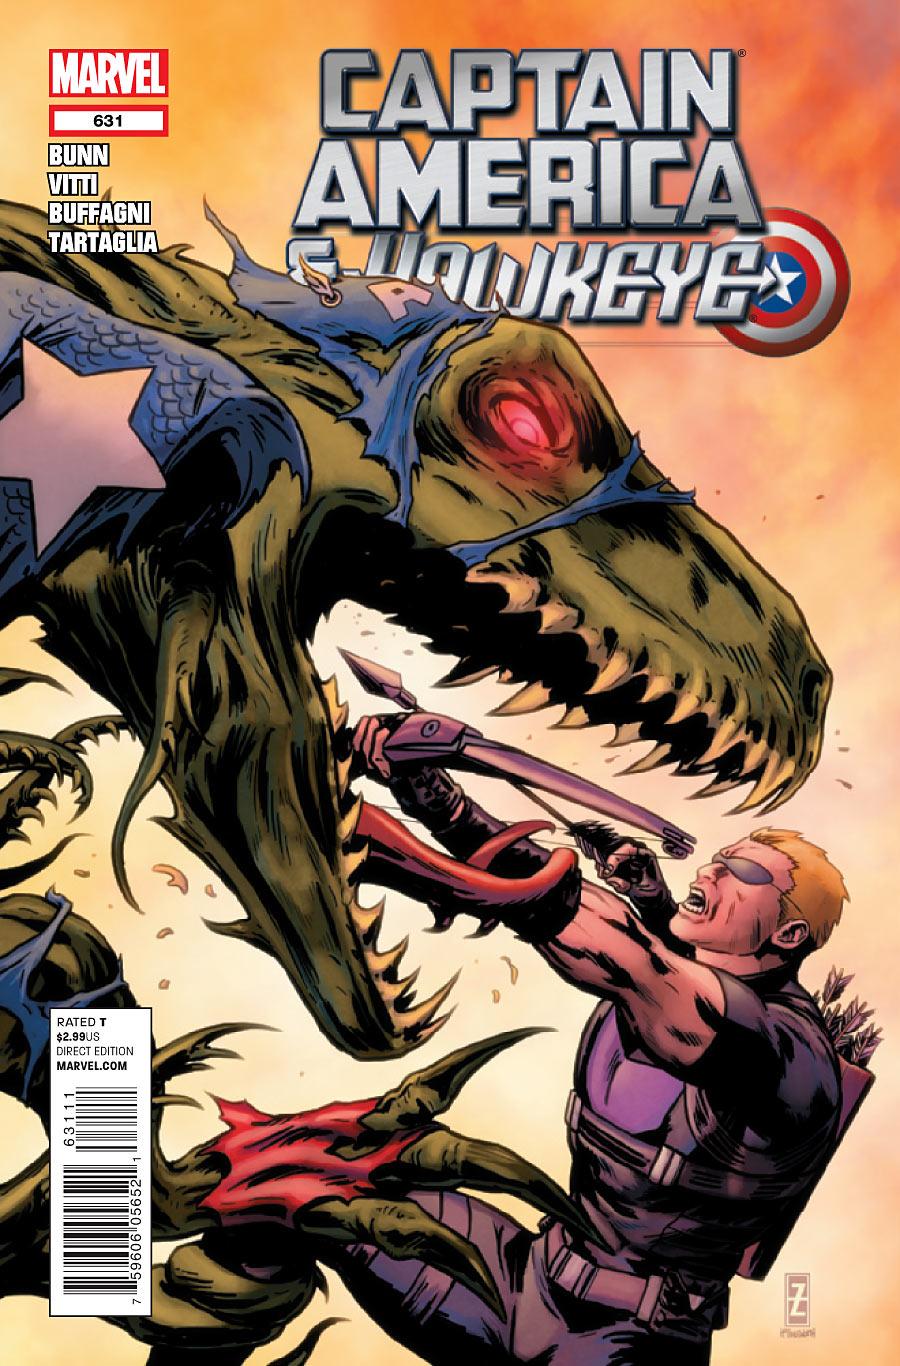 Captain America and Hawkeye Vol. 1 #631